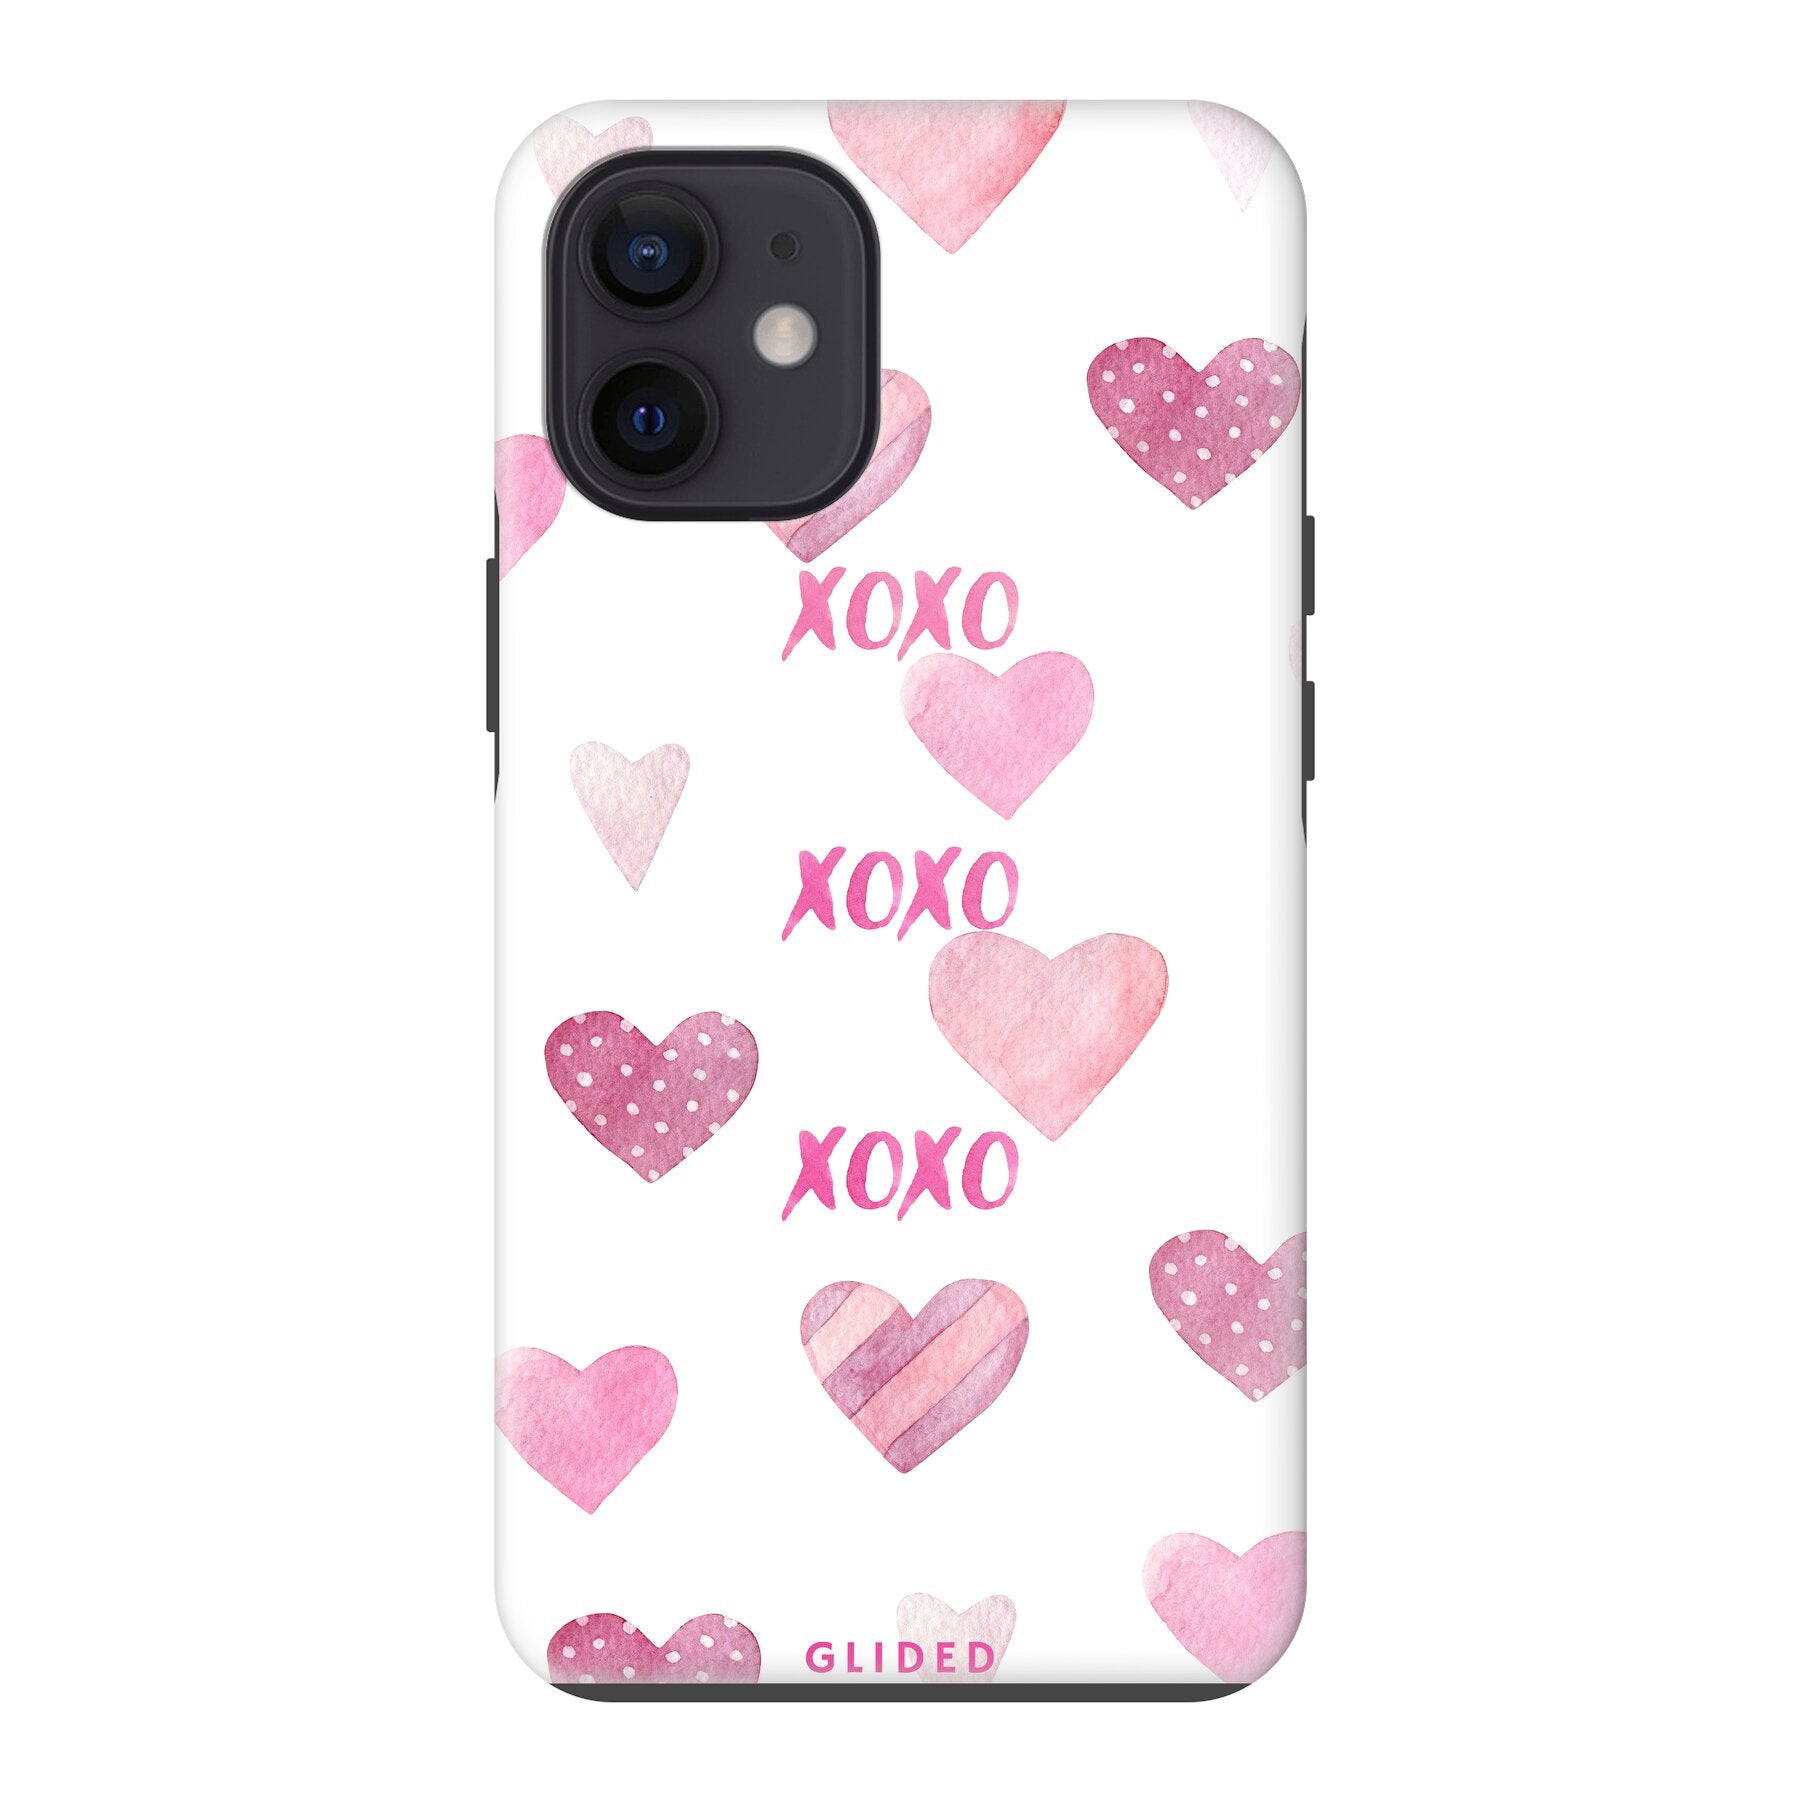 Xoxo - iPhone 12 mini - Tough case